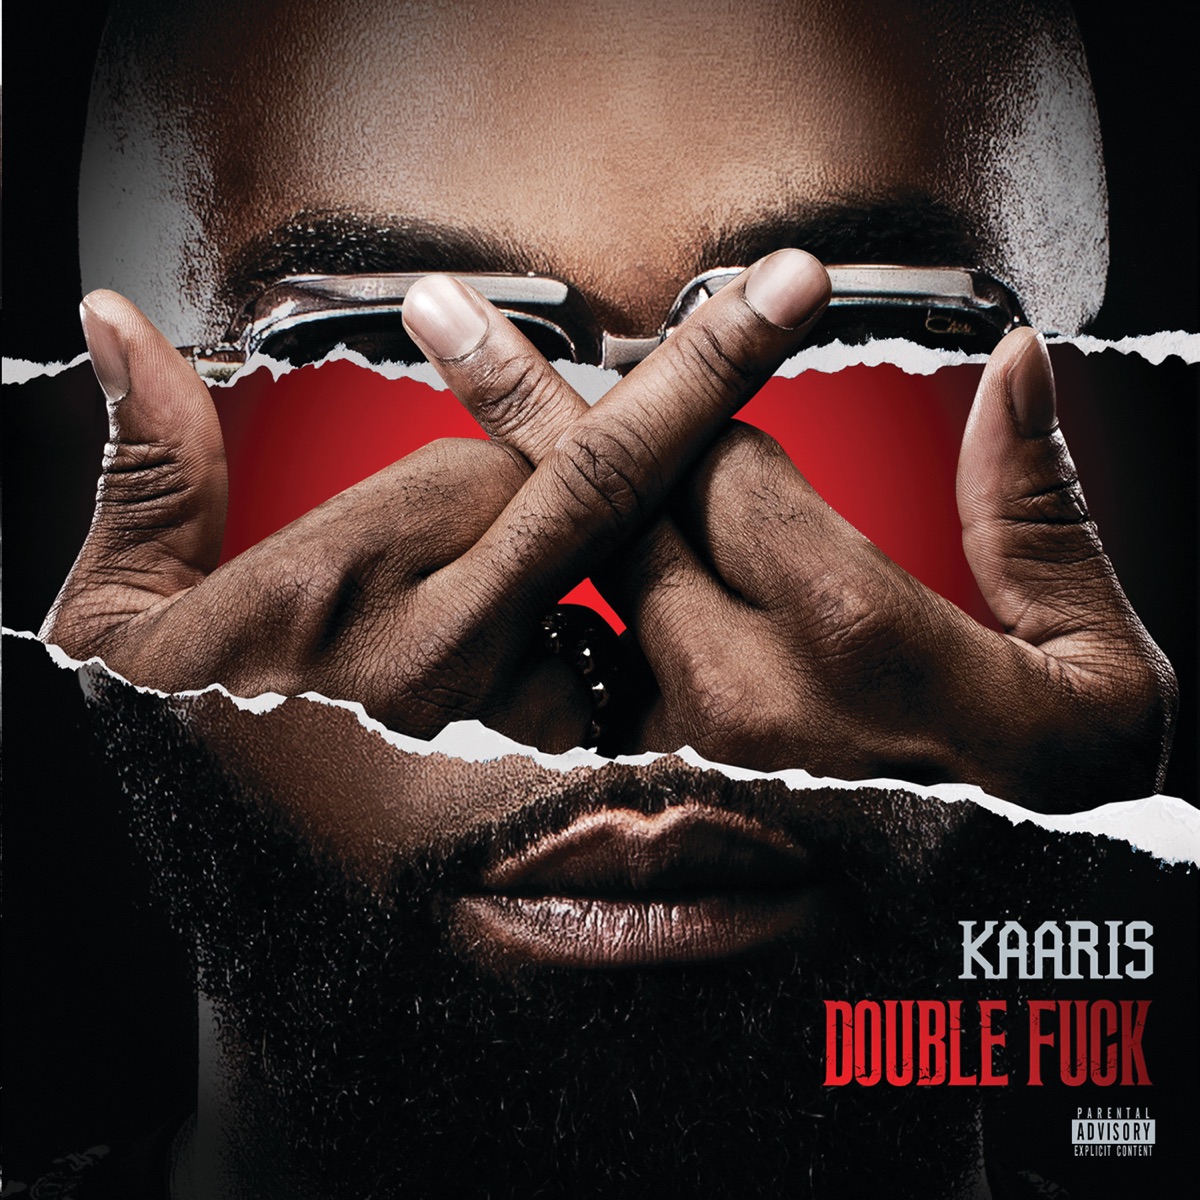 Double Fuck - Album by Kaaris - Apple Music